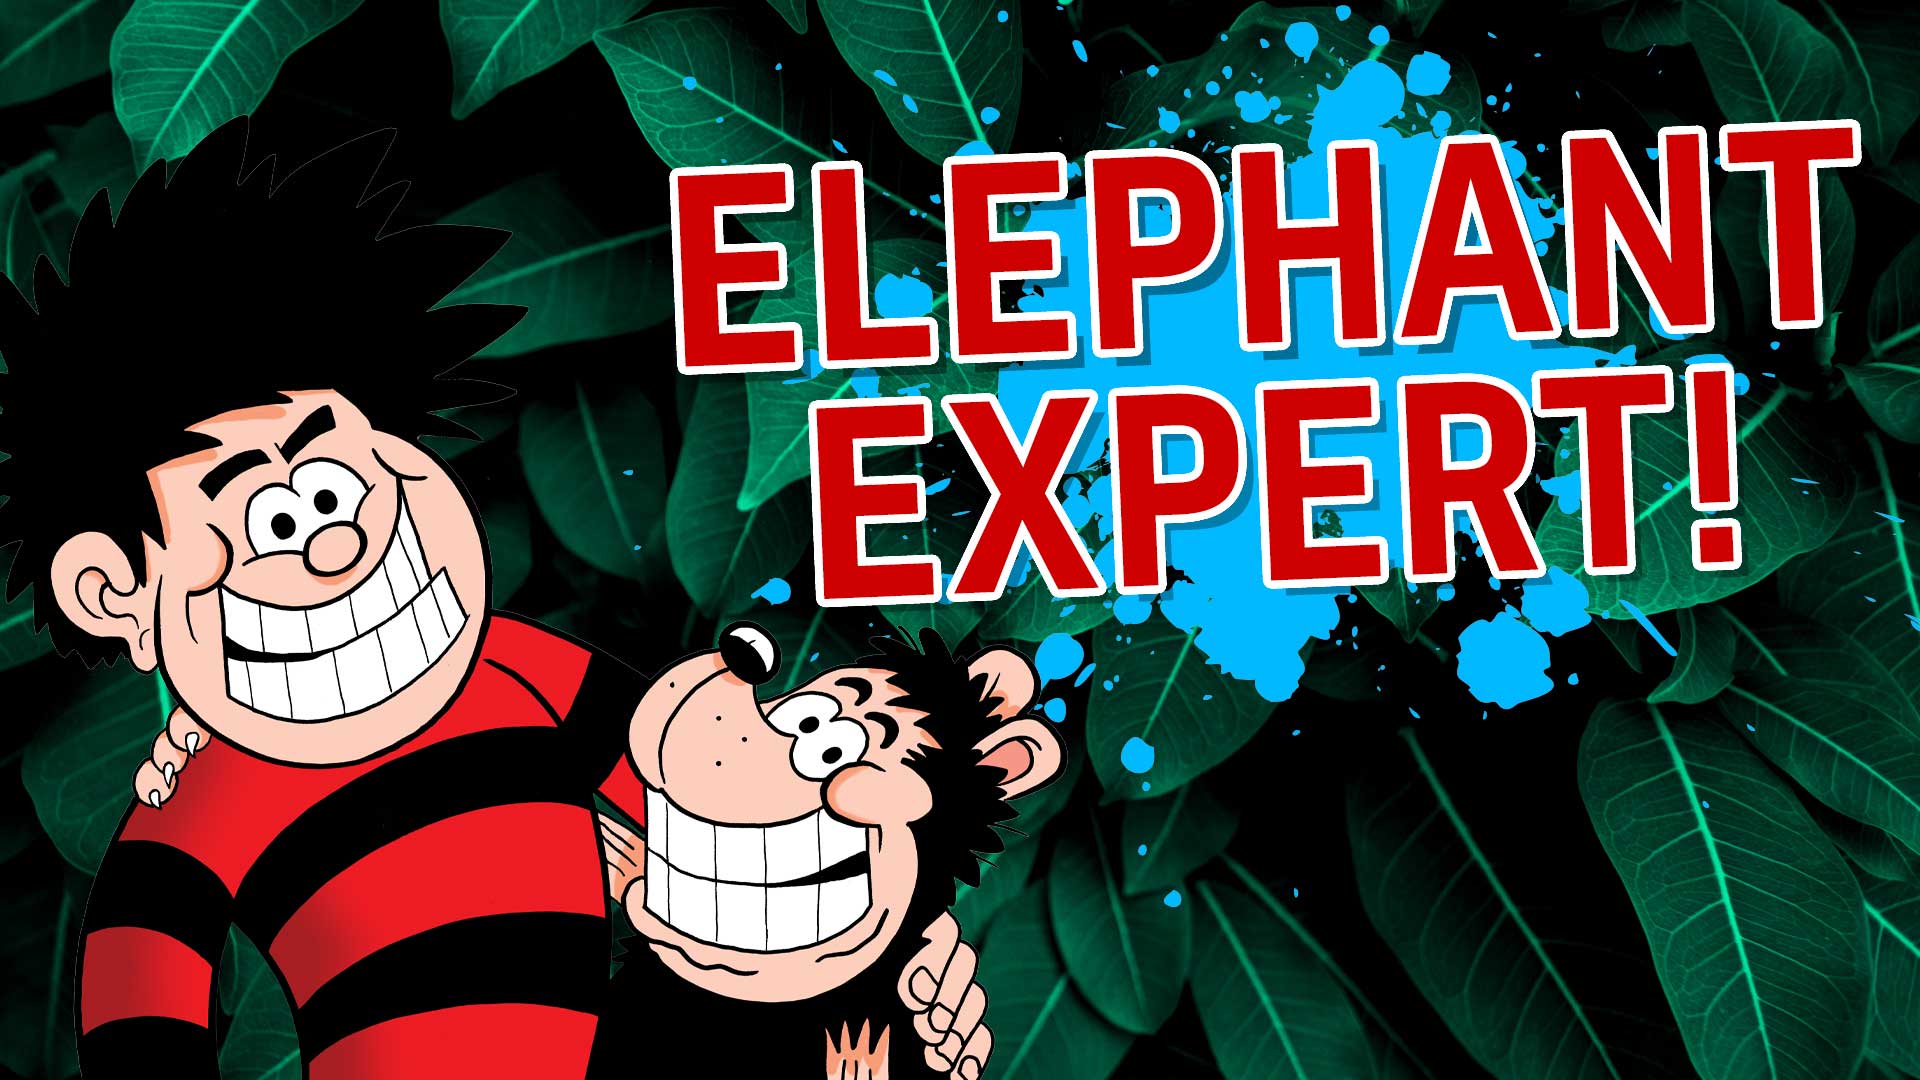 Result: Elephant Expert